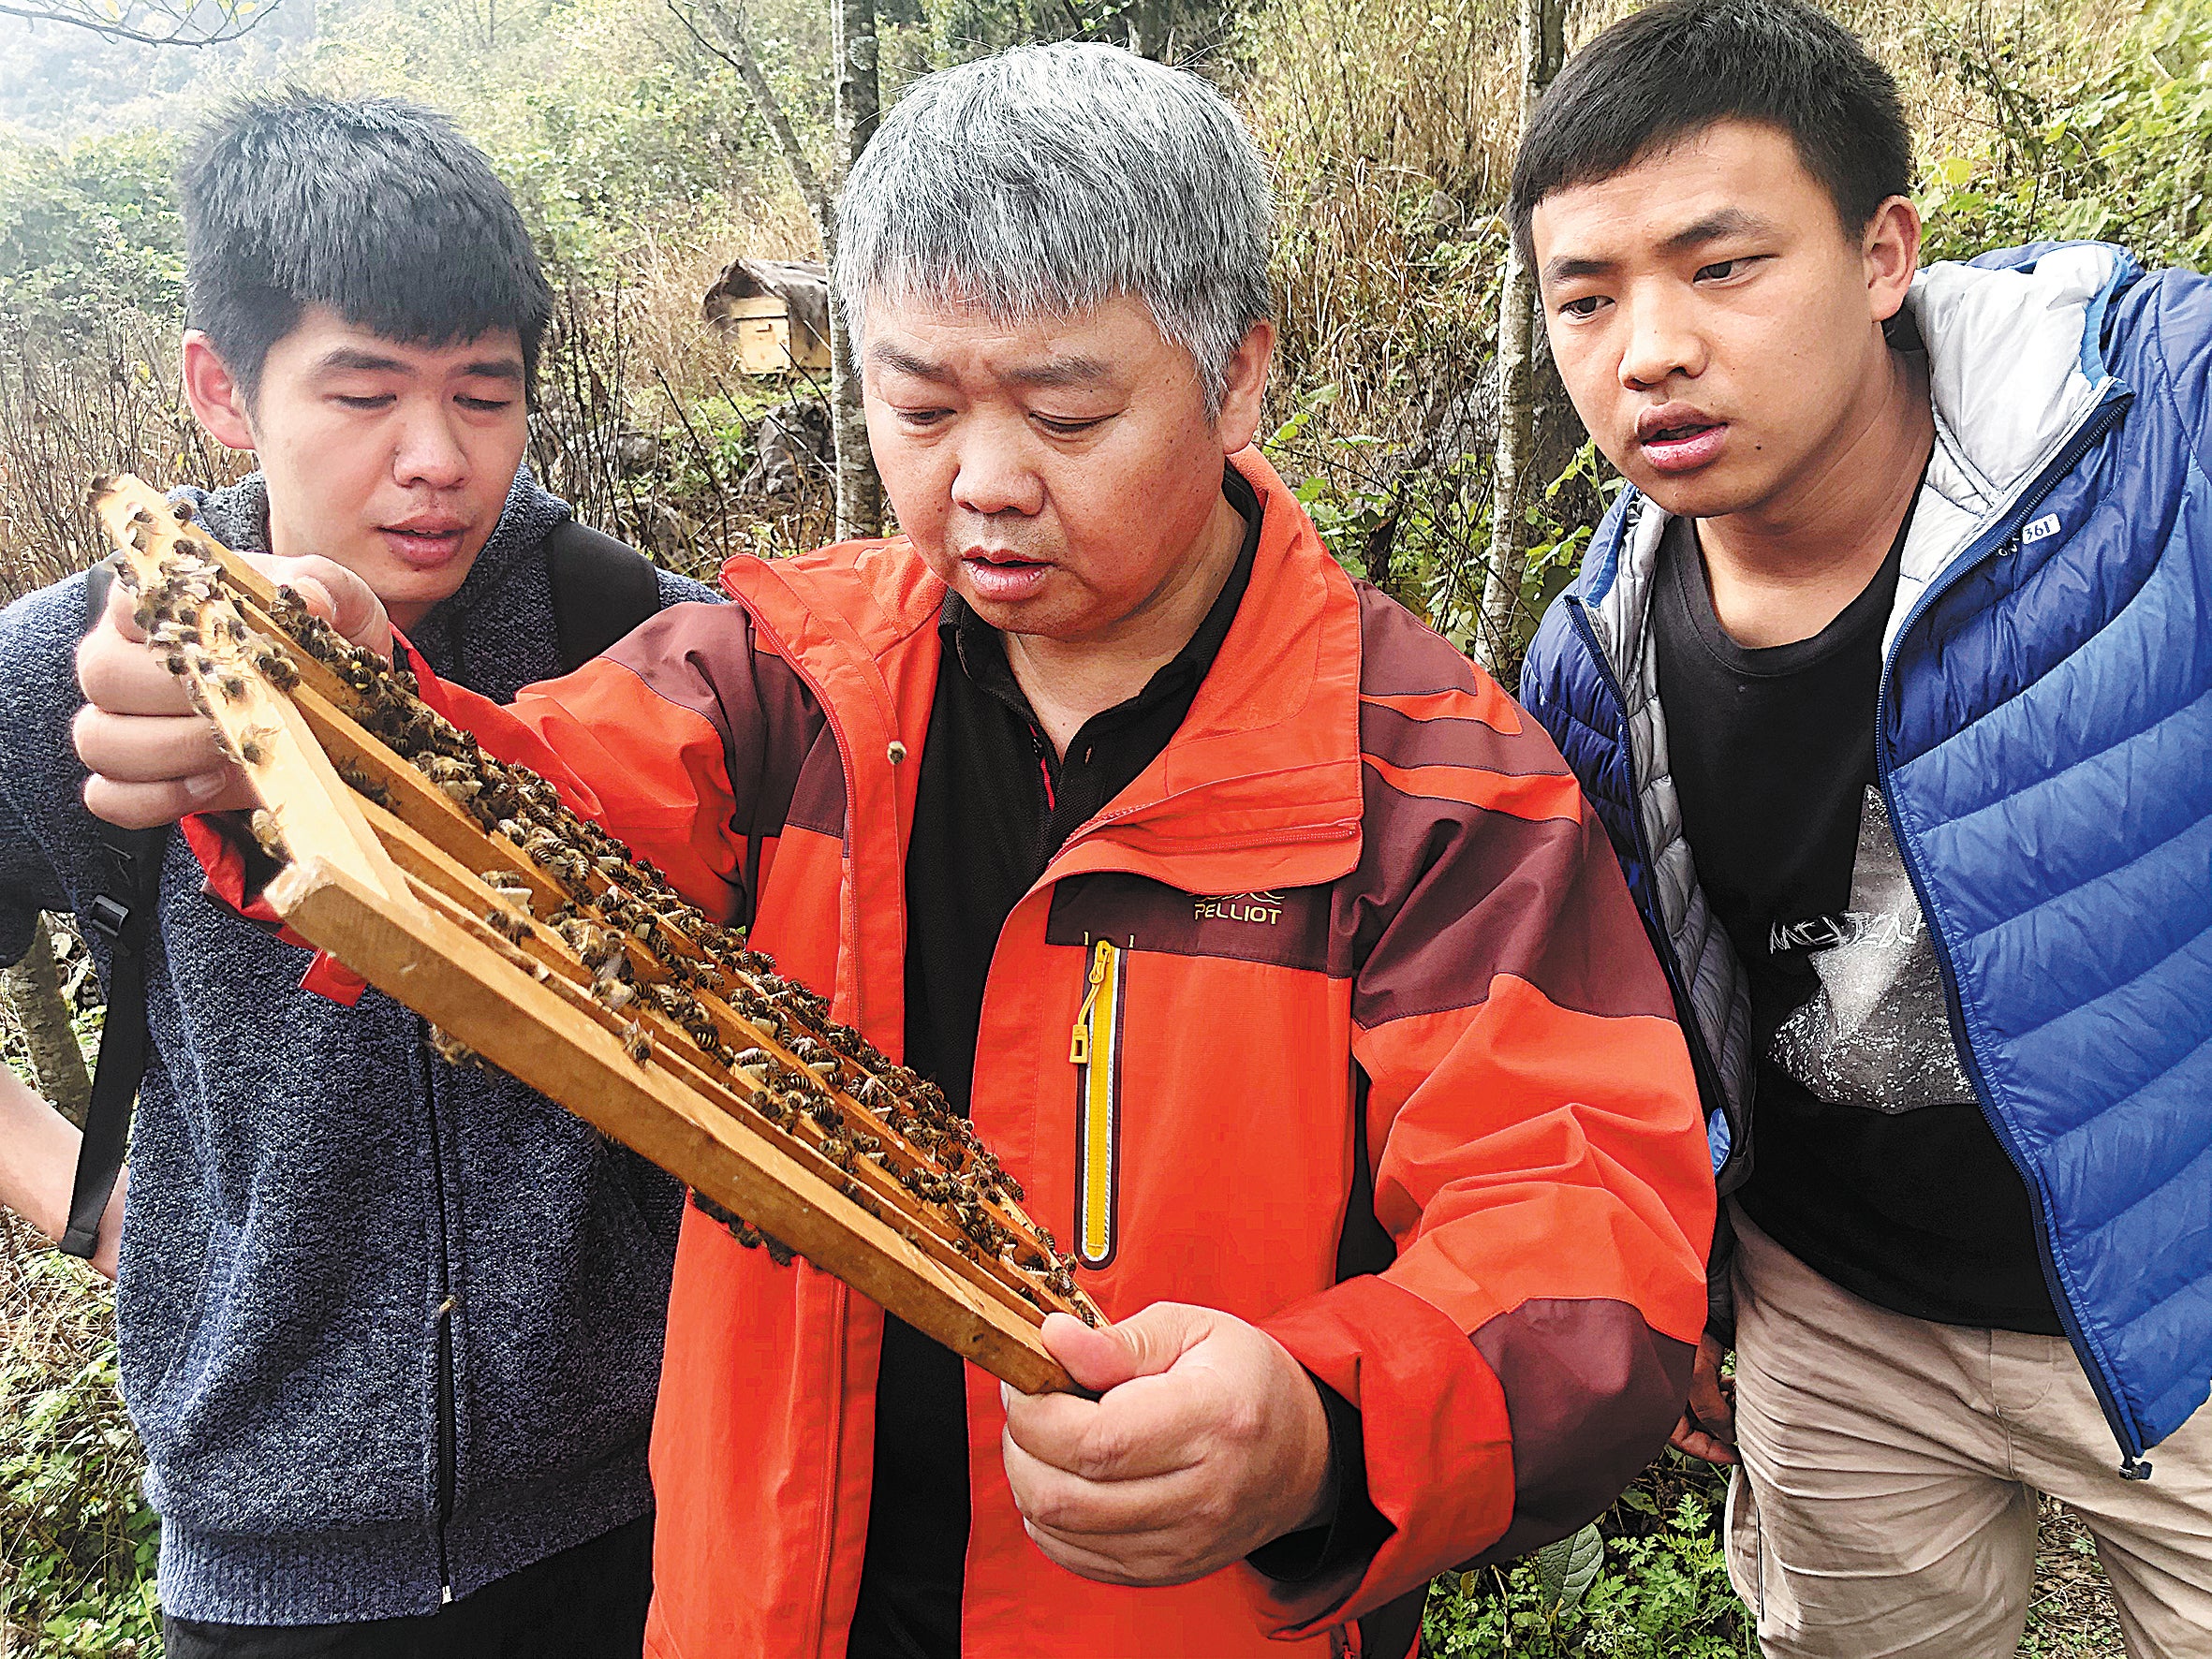 Kuang Haiou explains beekeeping methods to two residents of Xinzhu village, Lijiang, Yunnan province